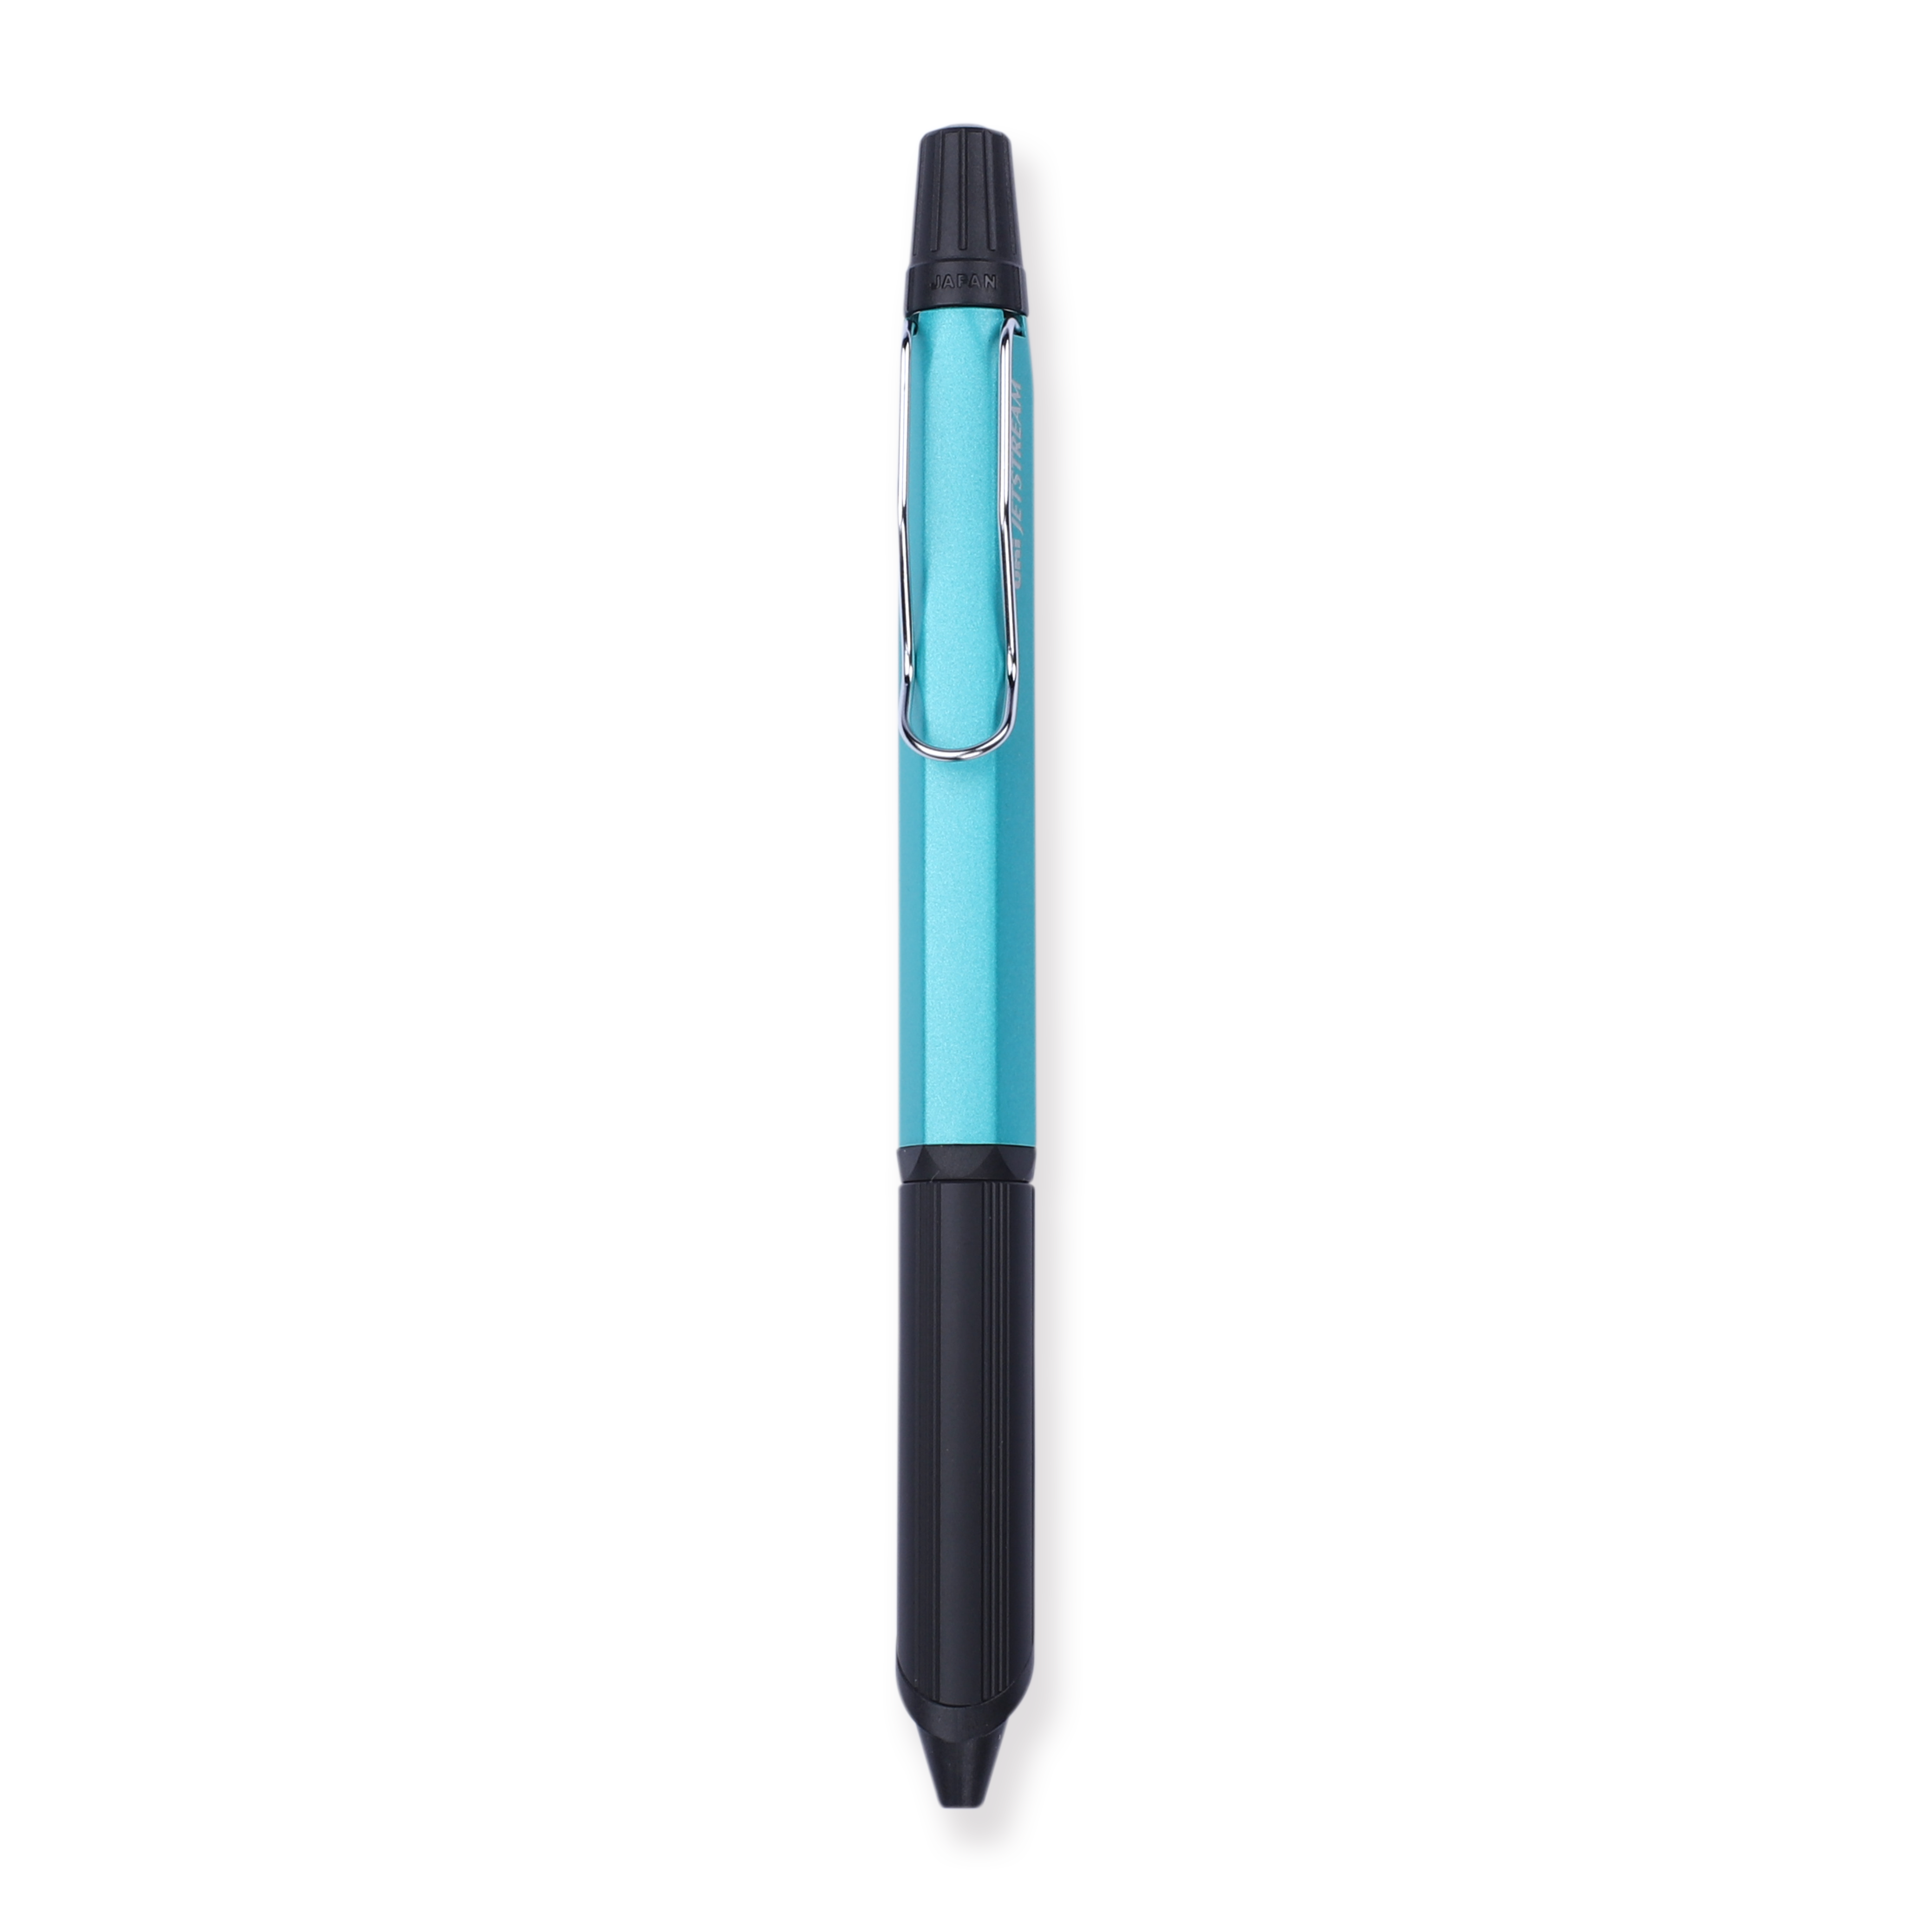 Uni Jetstream Edge 3 Multi Function Pen - 0.28 mm-Turquoise Body - Stationery Pal